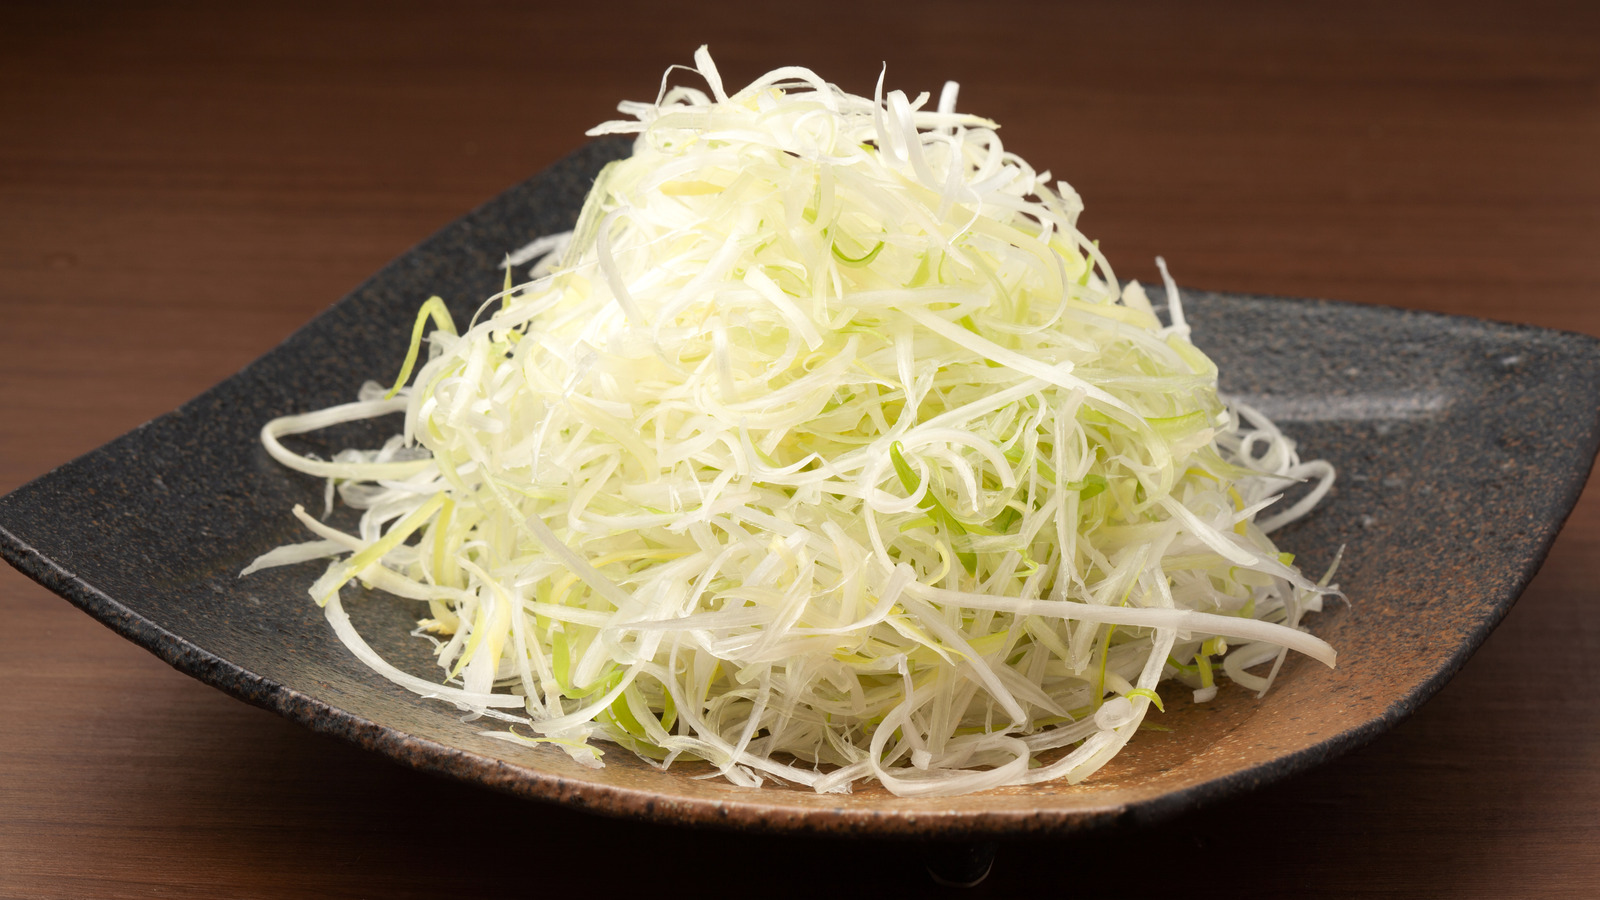 https://www.tastingtable.com/img/gallery/for-super-thin-onion-slices-try-shaving-them/l-intro-1674681326.jpg